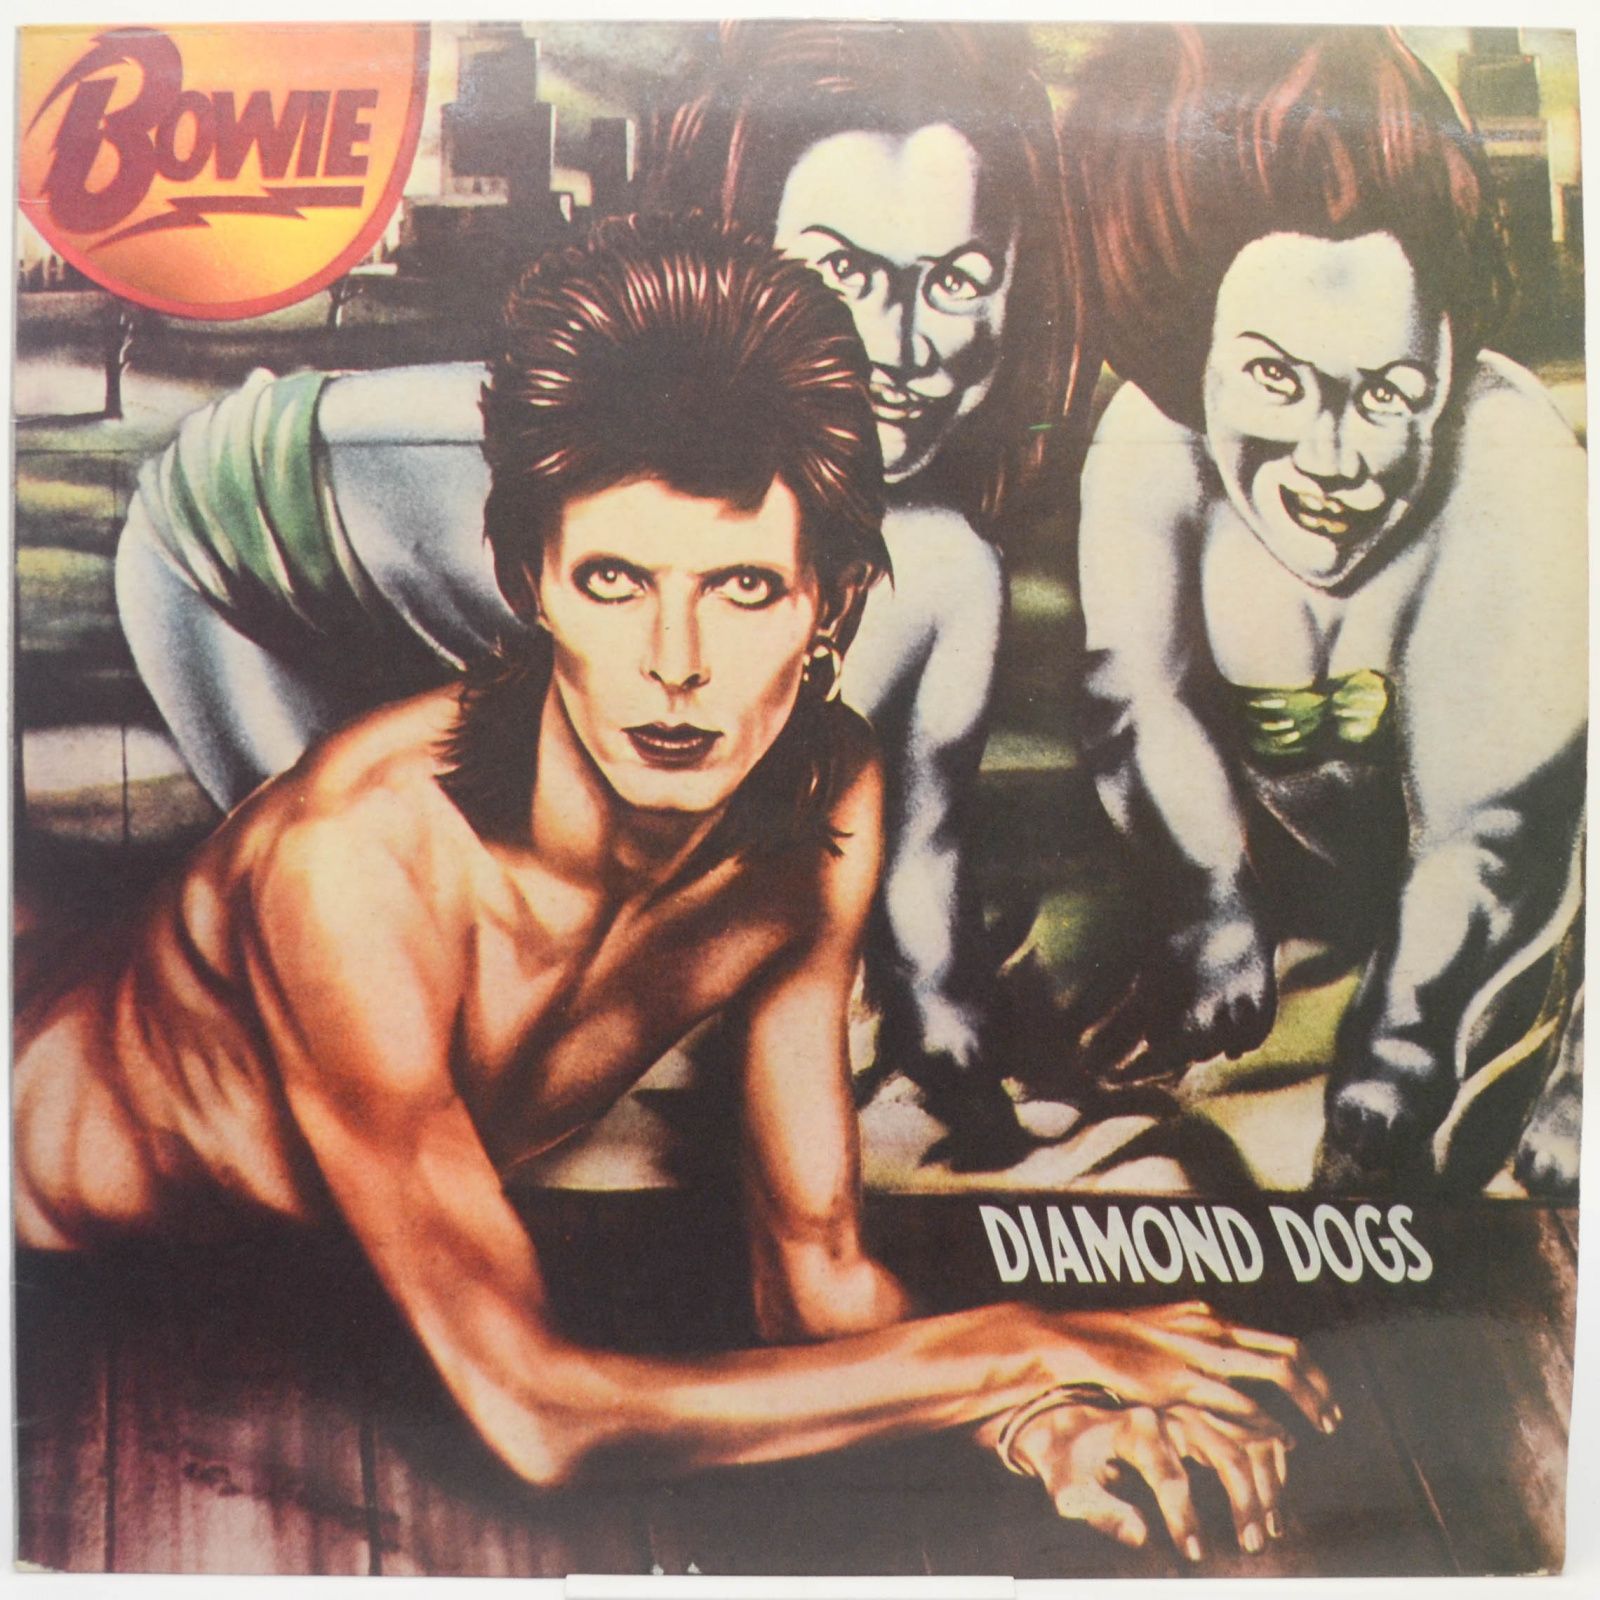 Bowie — Diamond Dogs, 1974